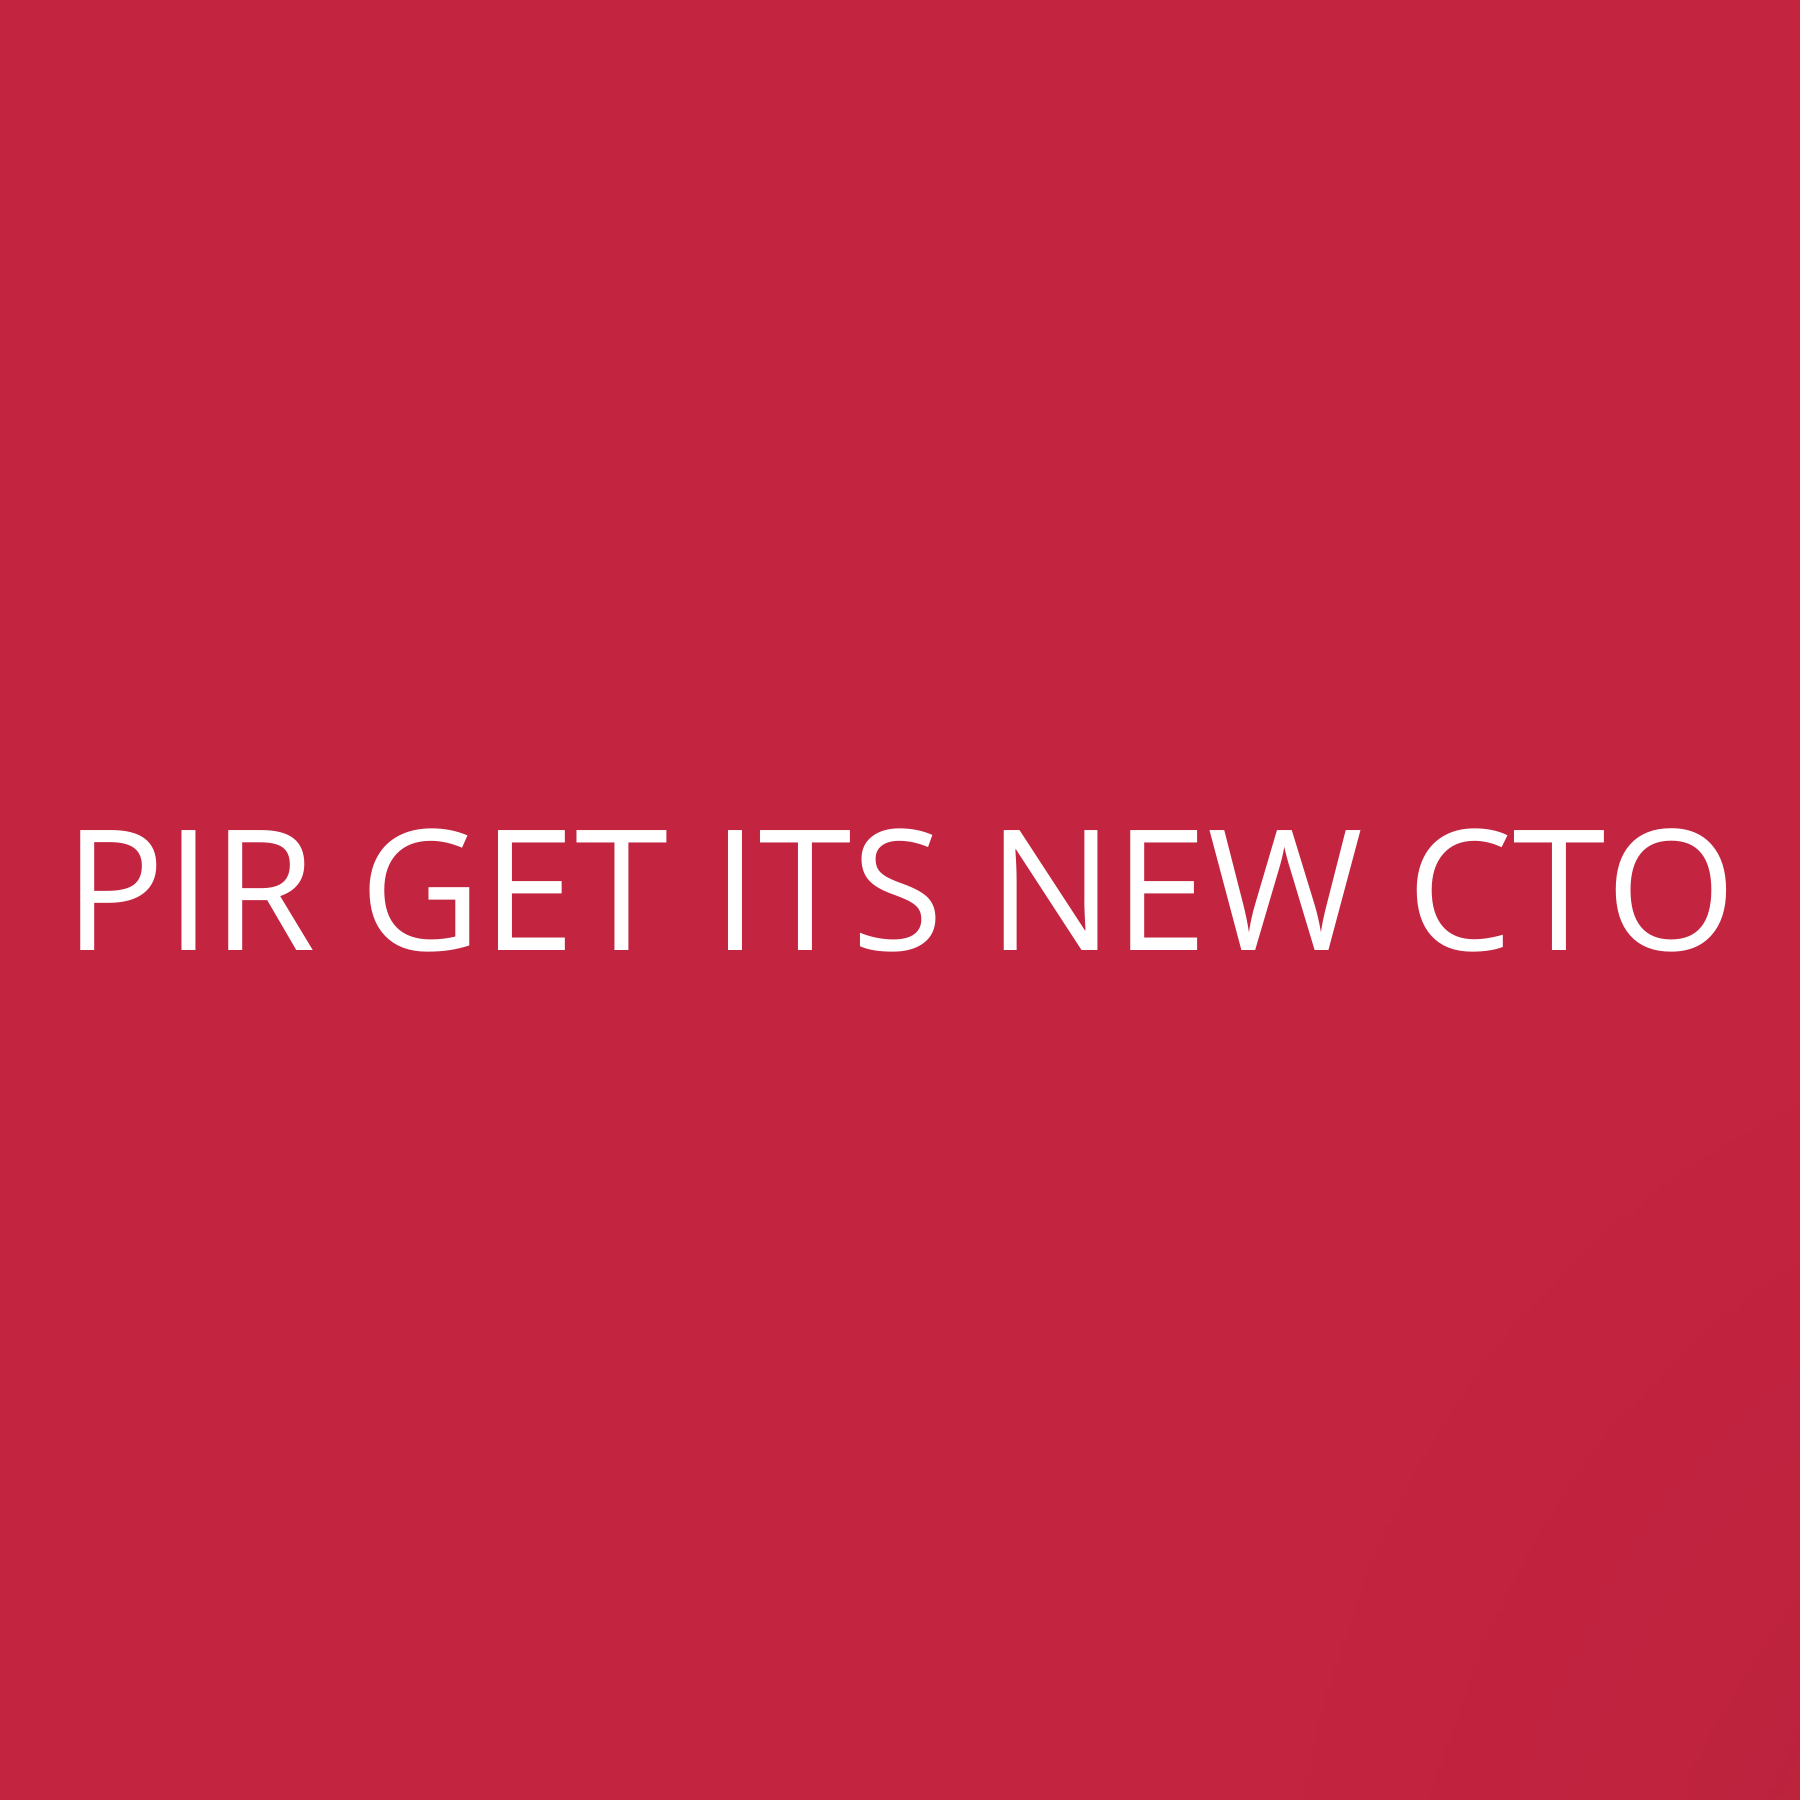 PIR get its new CTO